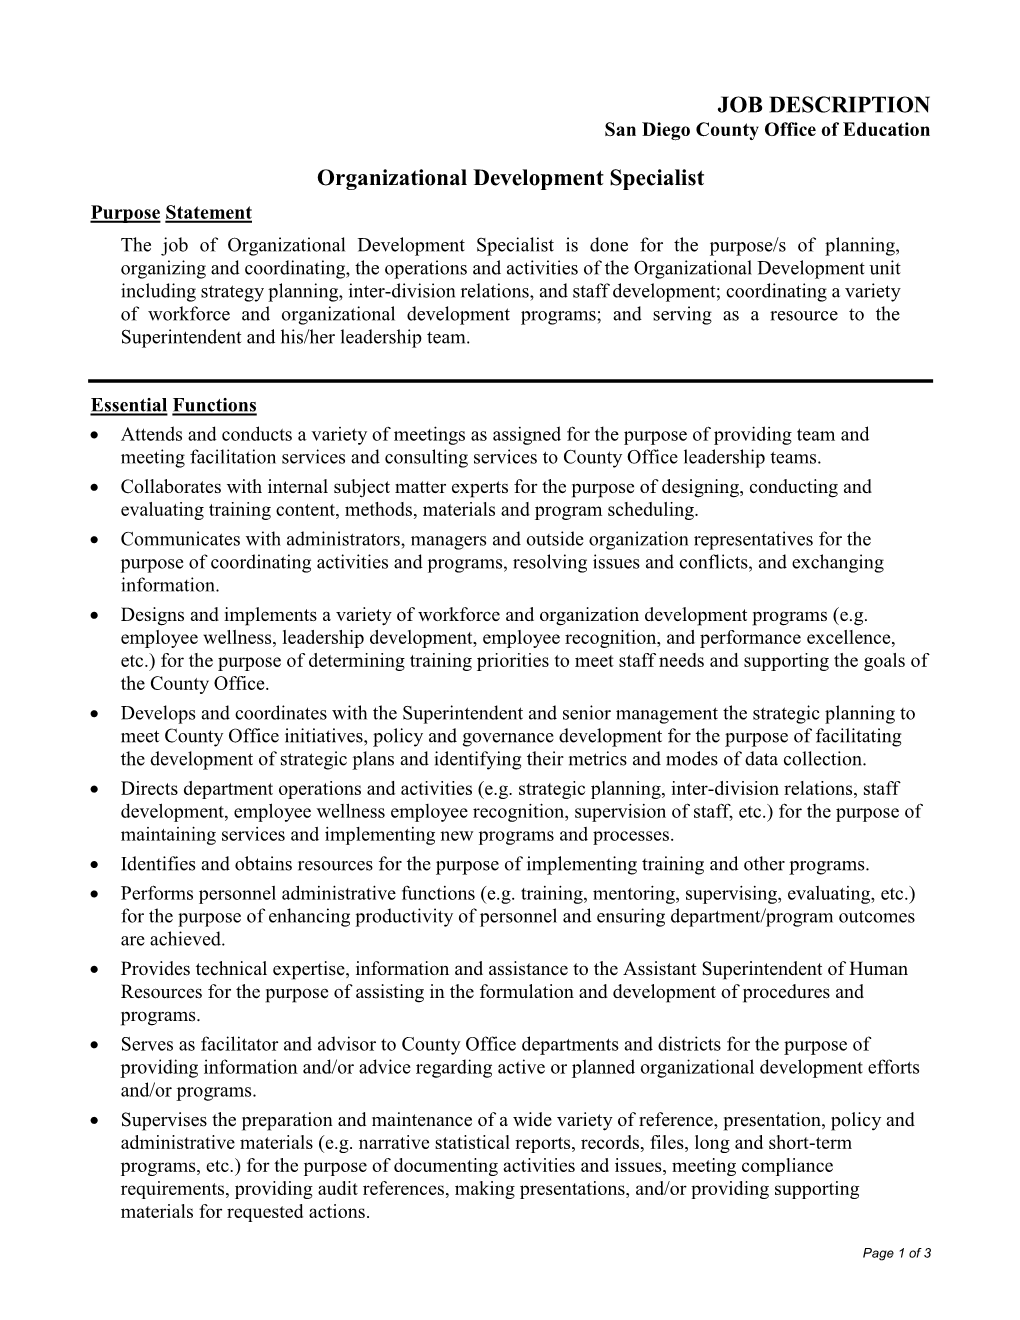 Organizational Development Specialist